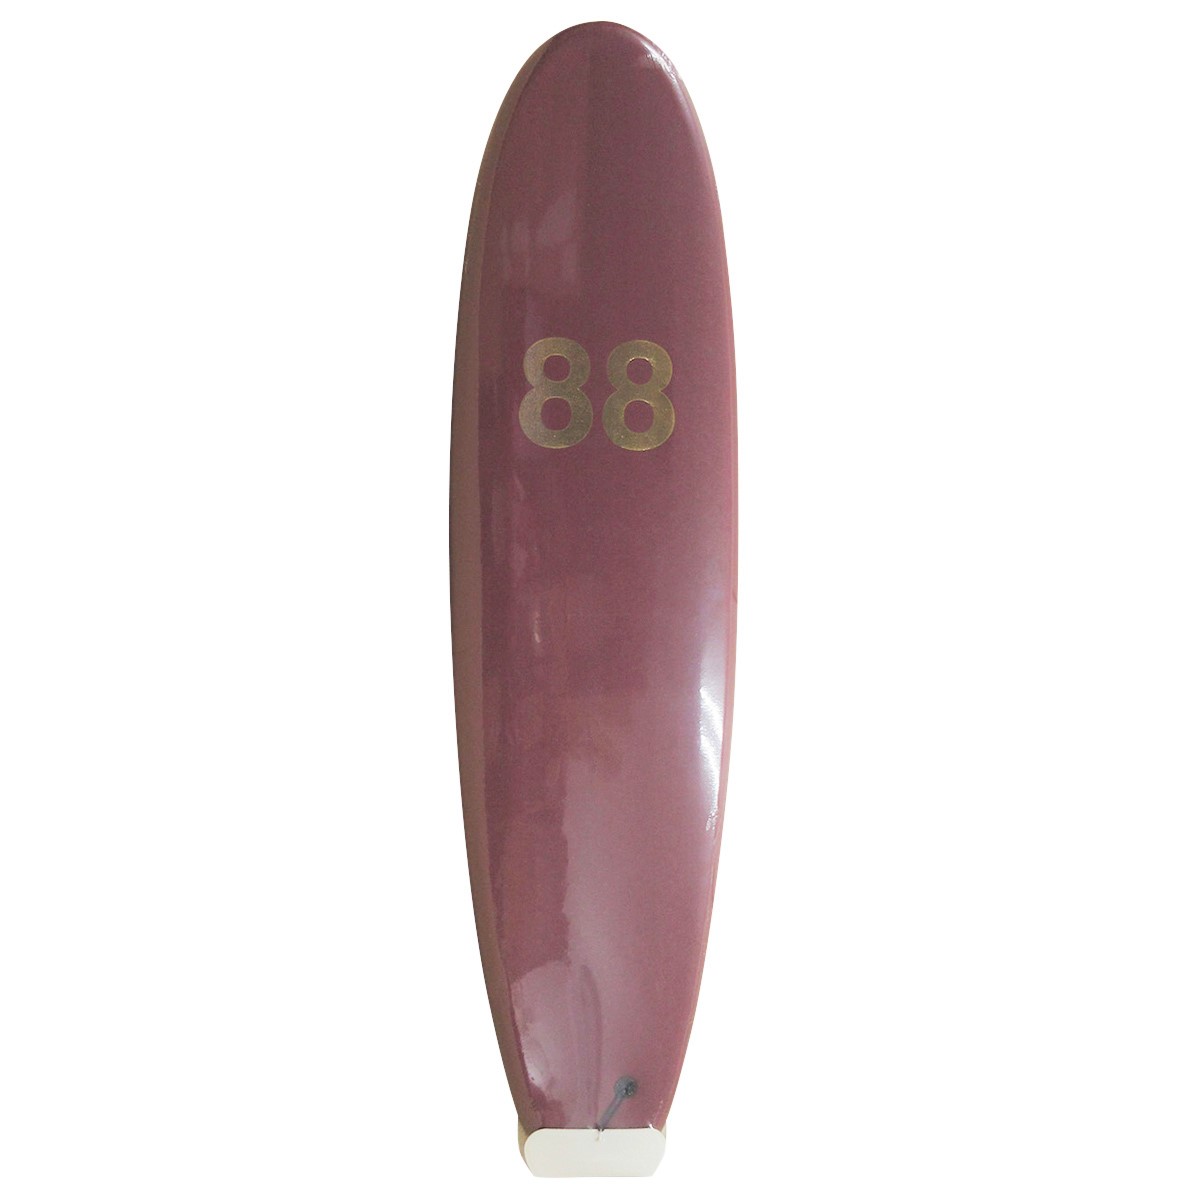 88 SURFBOARDS / SINGLE 7`0 BURGUNDY